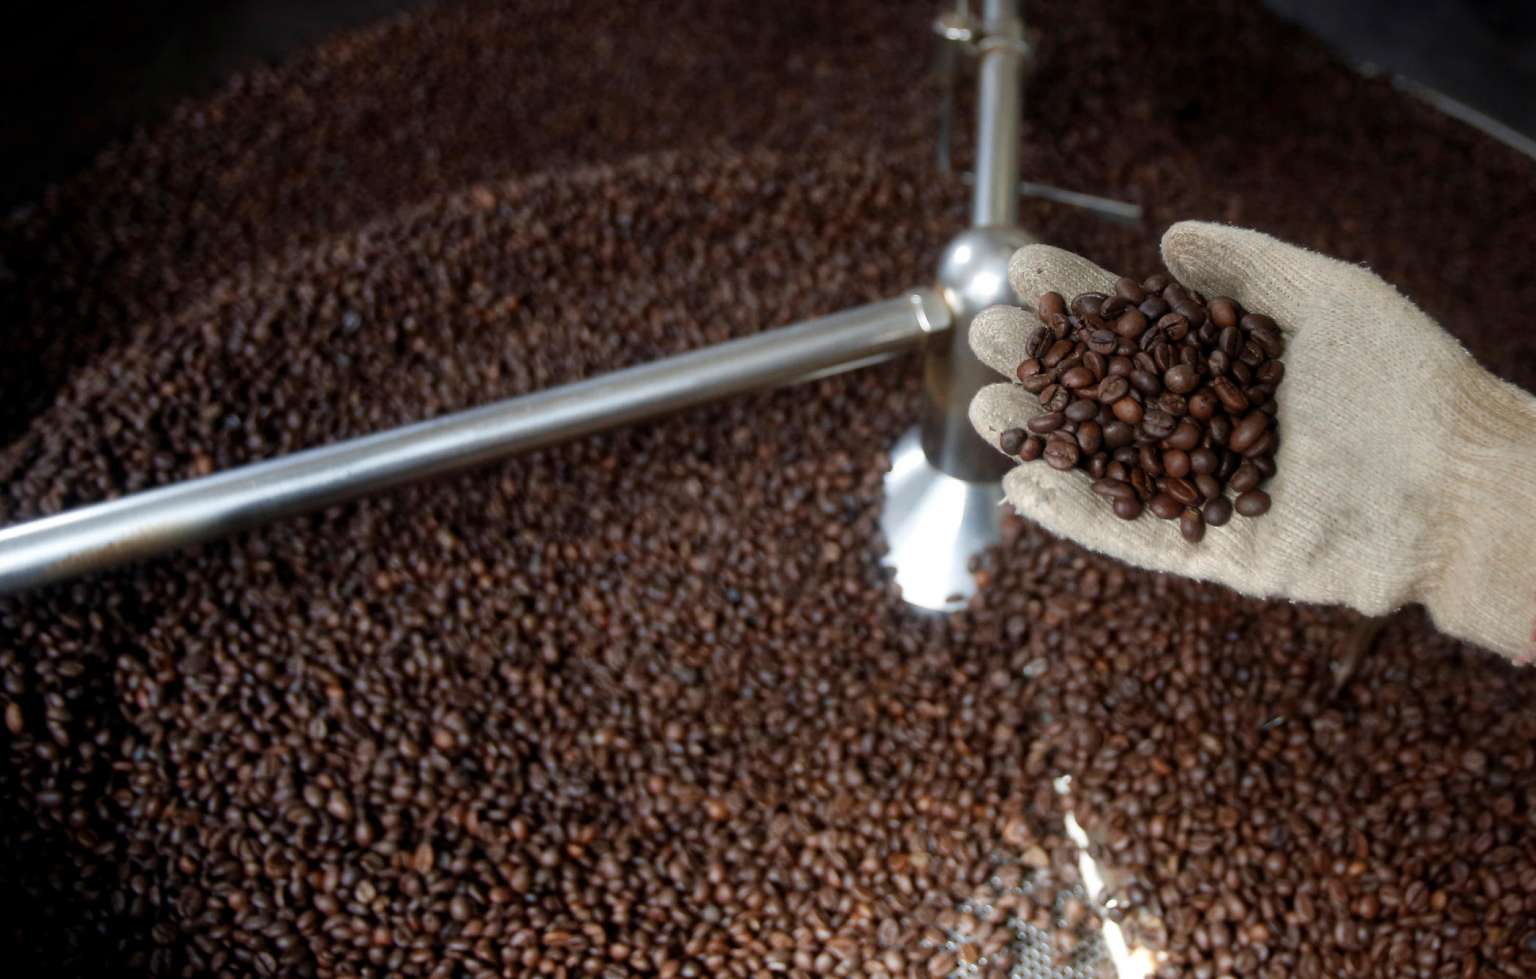 Vietnam Dec coffee exports up 57.6% m/m, rice down 13.4%